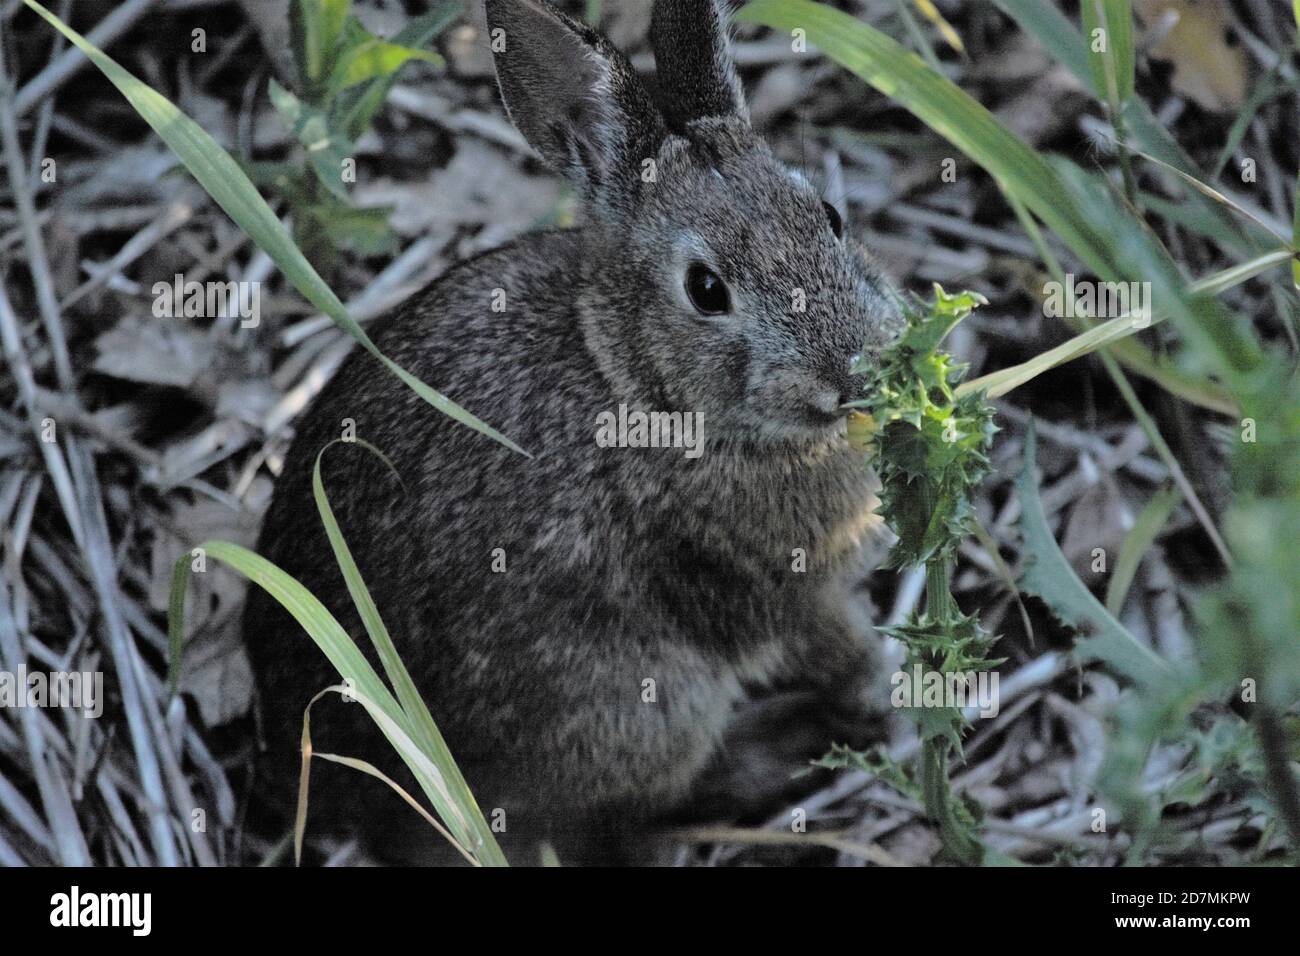 A wild bunny at the Tualatin River National Wildlife Refuge. Stock Photo